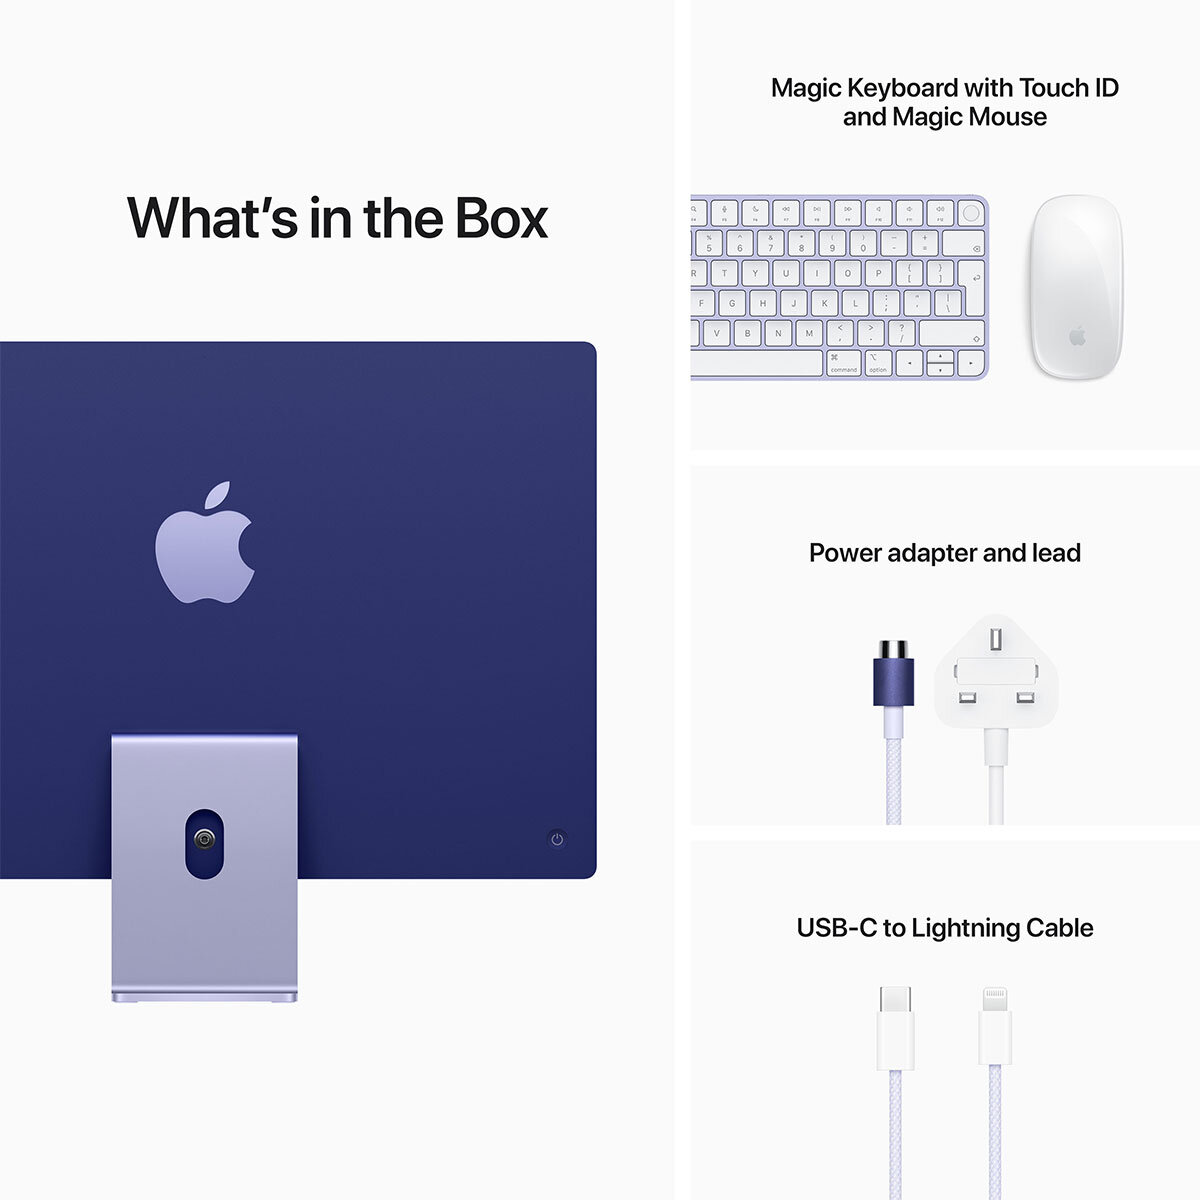 Buy Apple iMac 2021, Apple M1 Chip, 8-Core GPU, 16GB RAM, 2TB SSD, 24 Inch in Purple at costco.co.uk